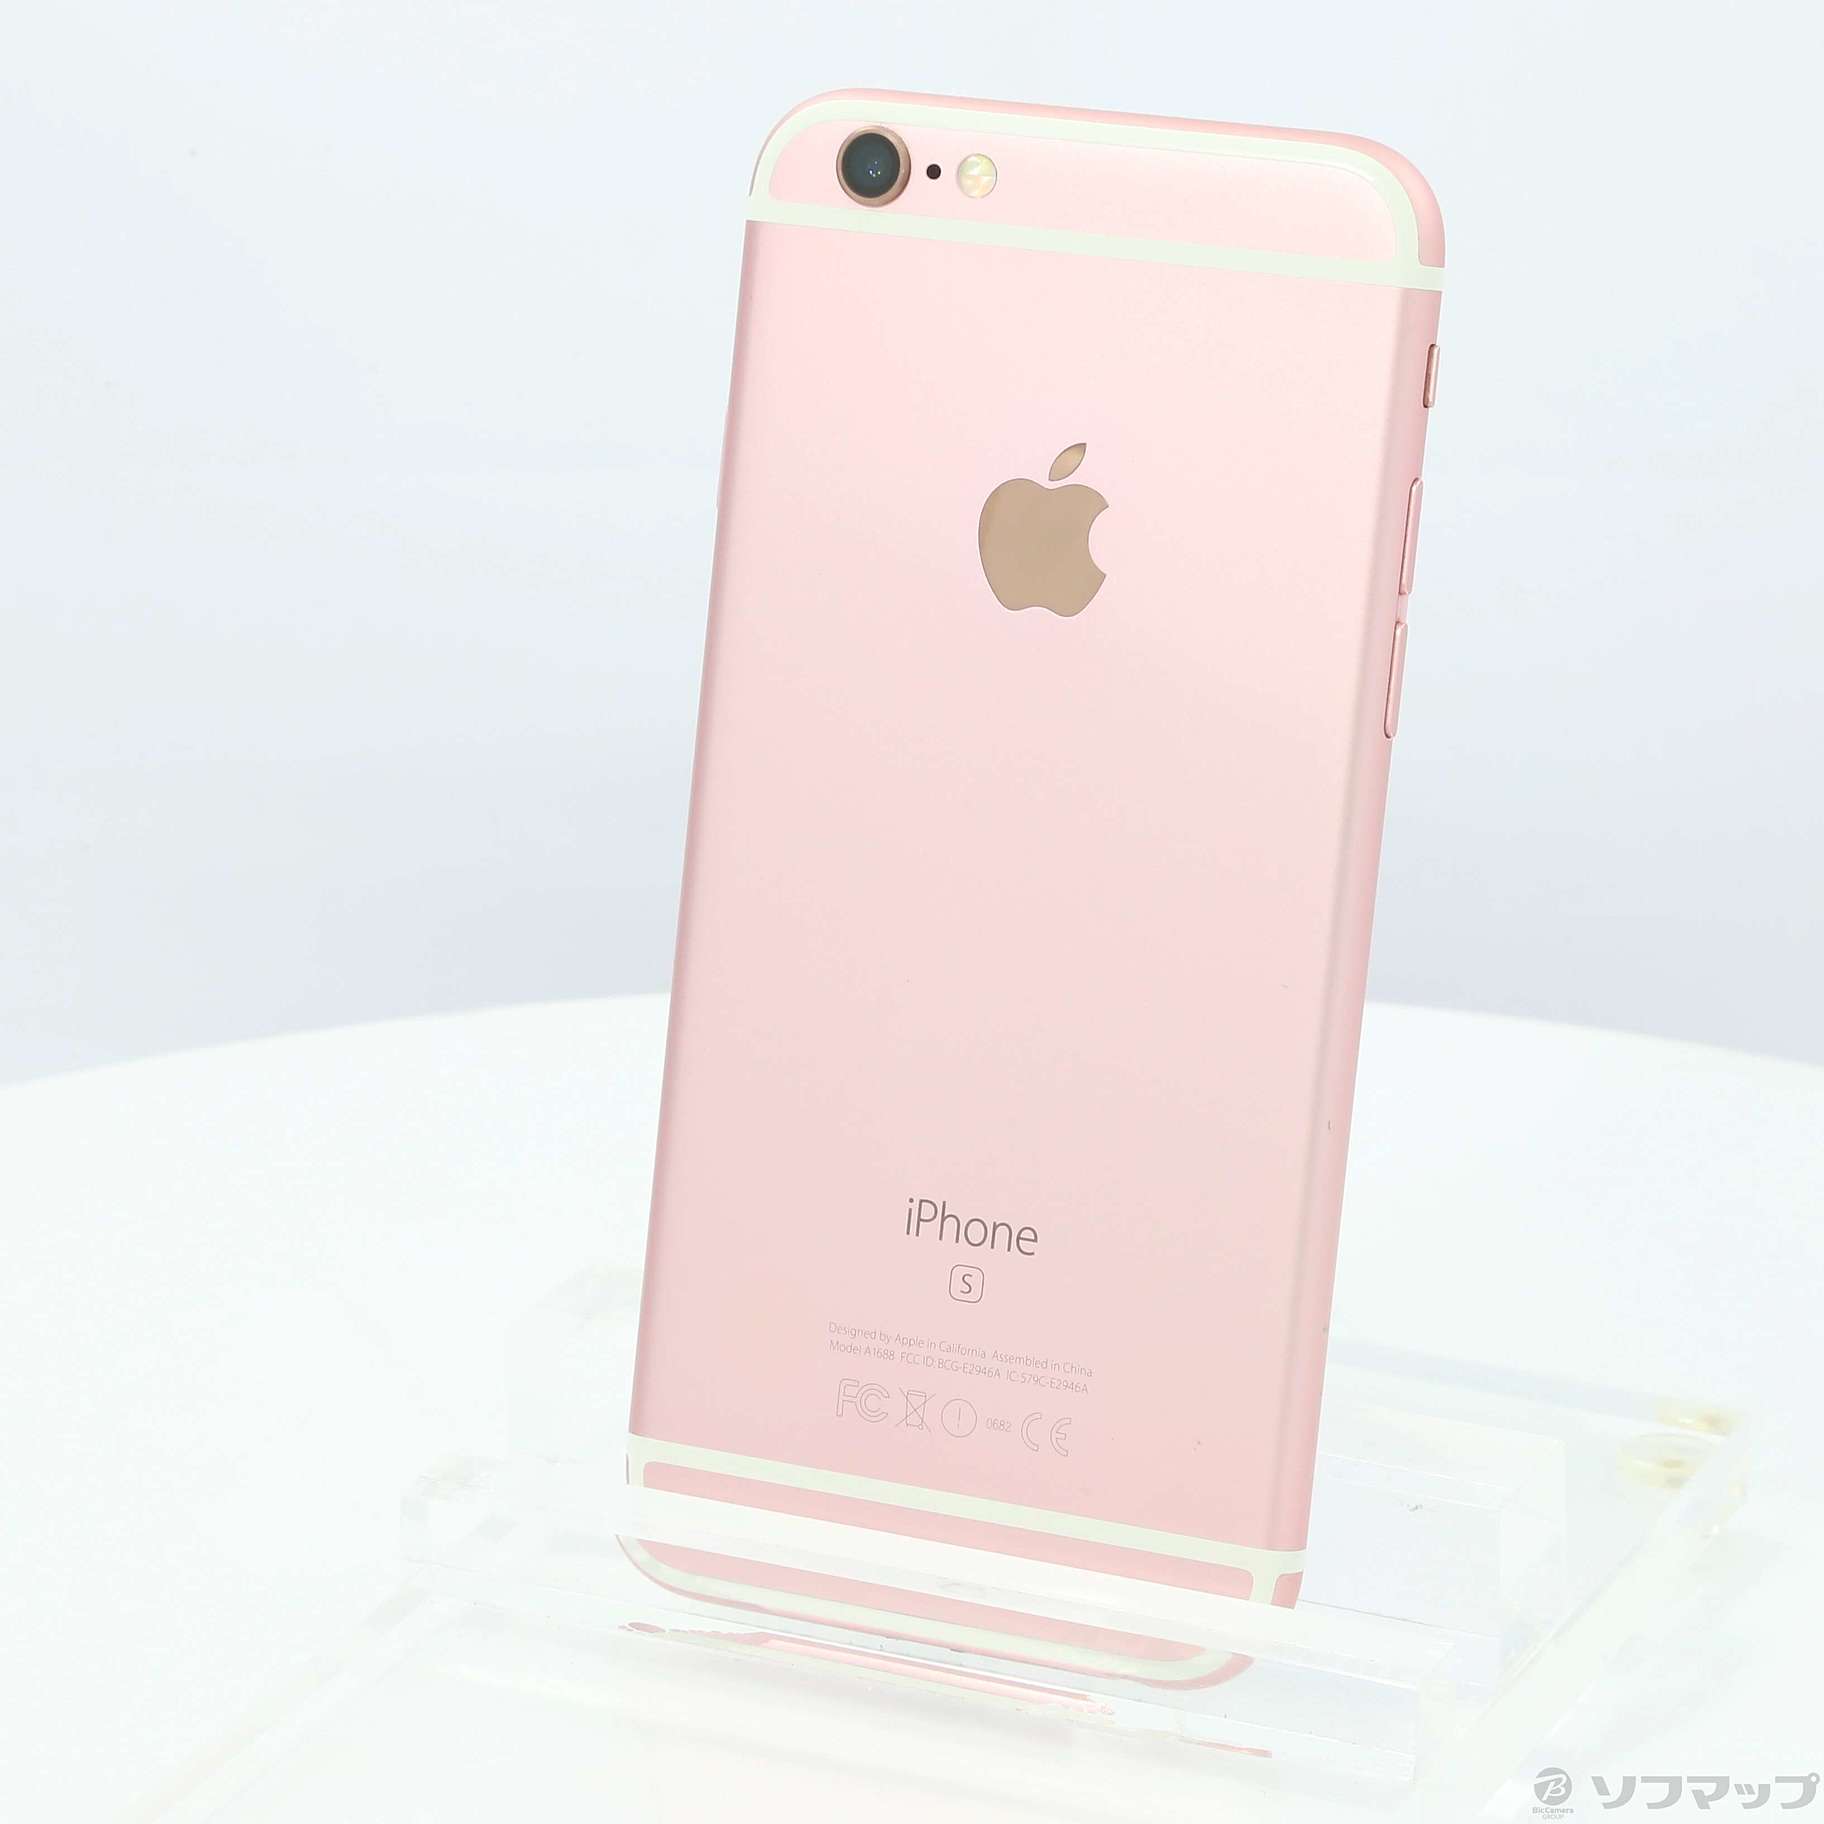 iPhone6s Rose Gold 16GB simフリー ピンク-